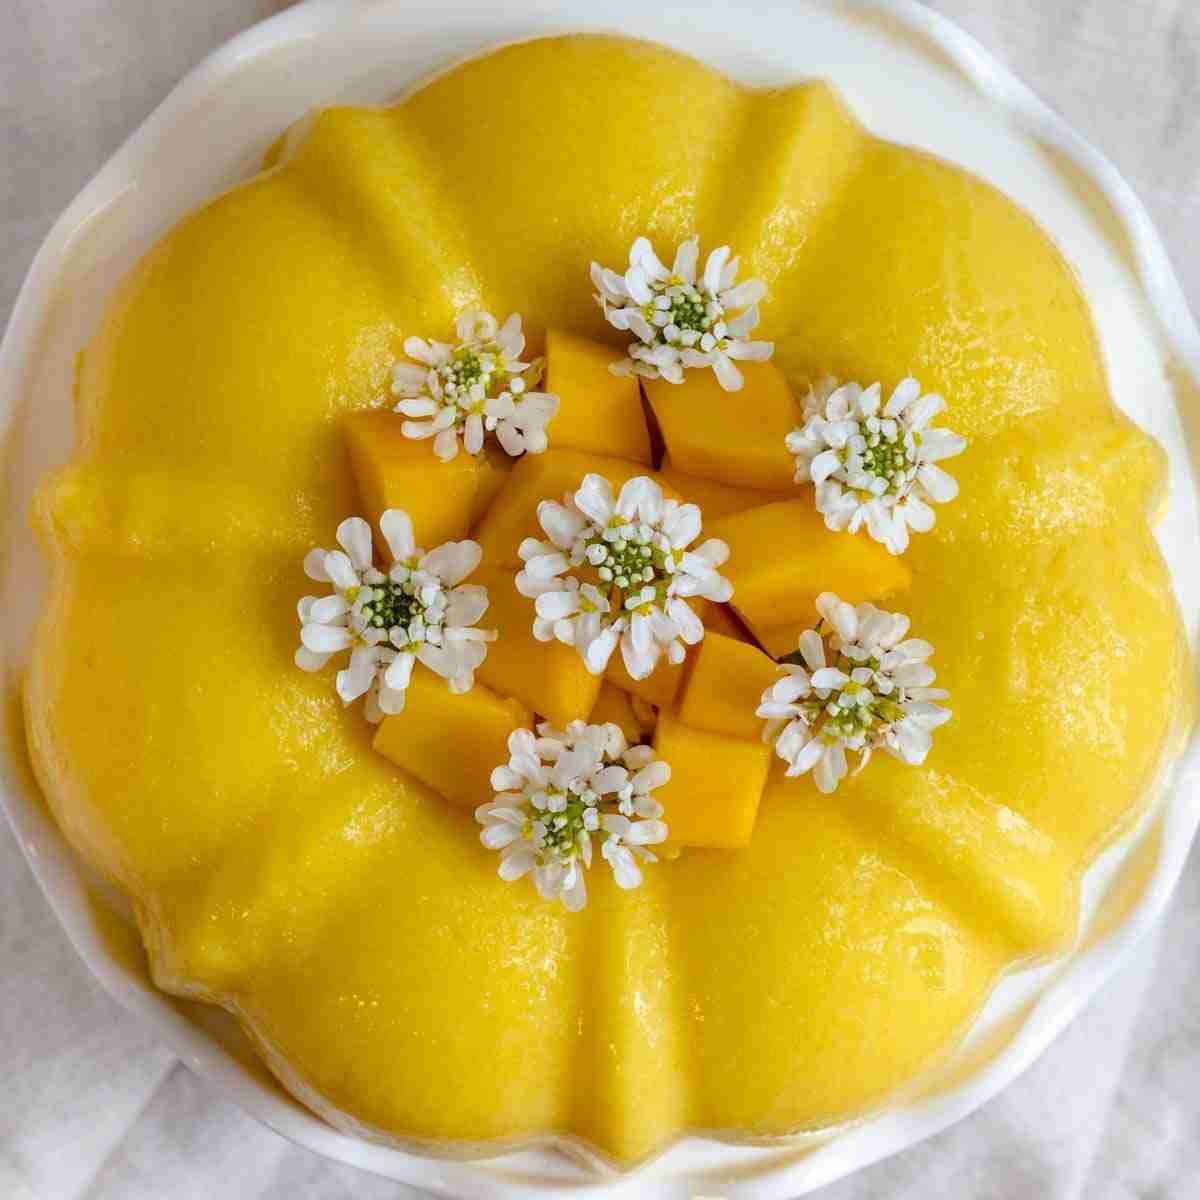 Vegan mango coconut milk jello cake topped with mango slices and fresh white flowers.